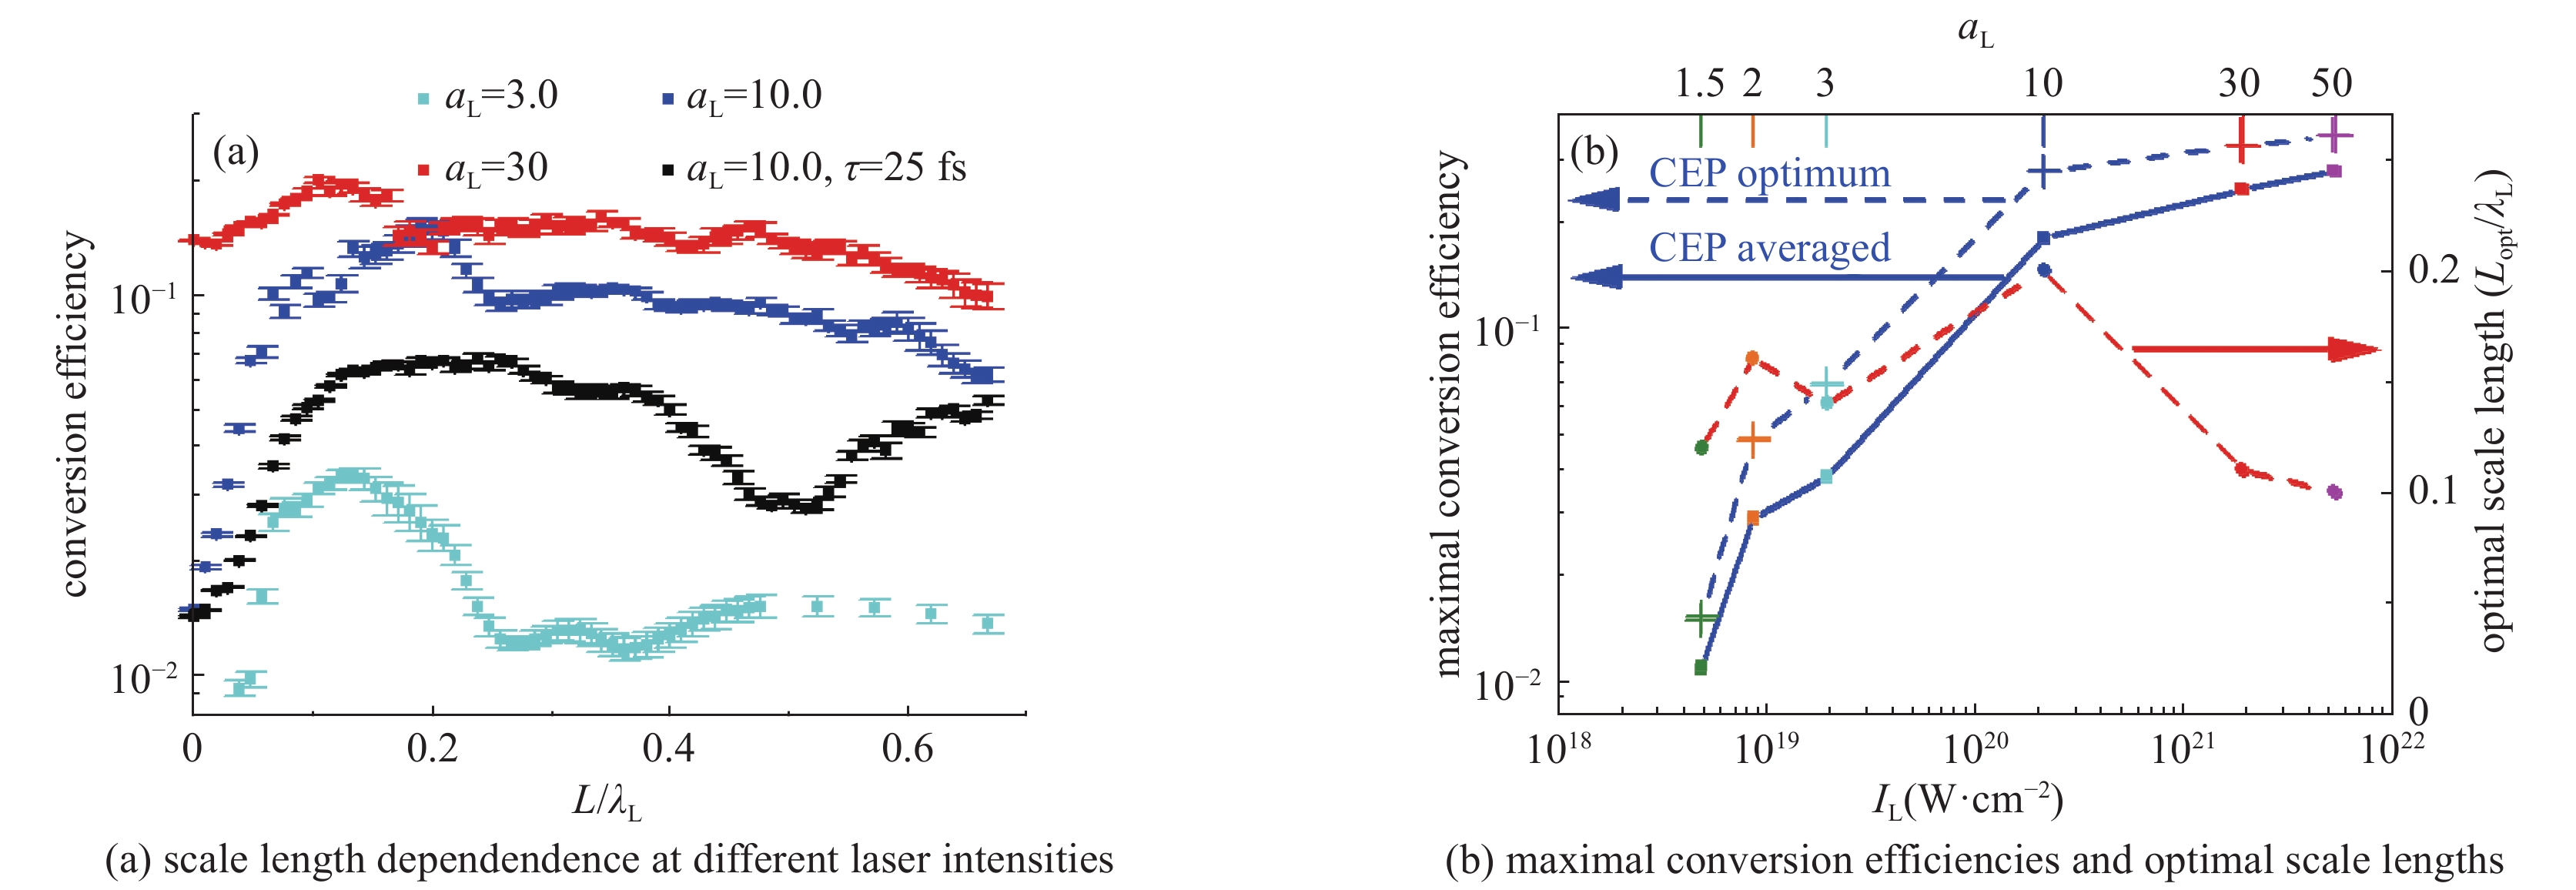 Harmonic conversion efficiencies at different laser intensities